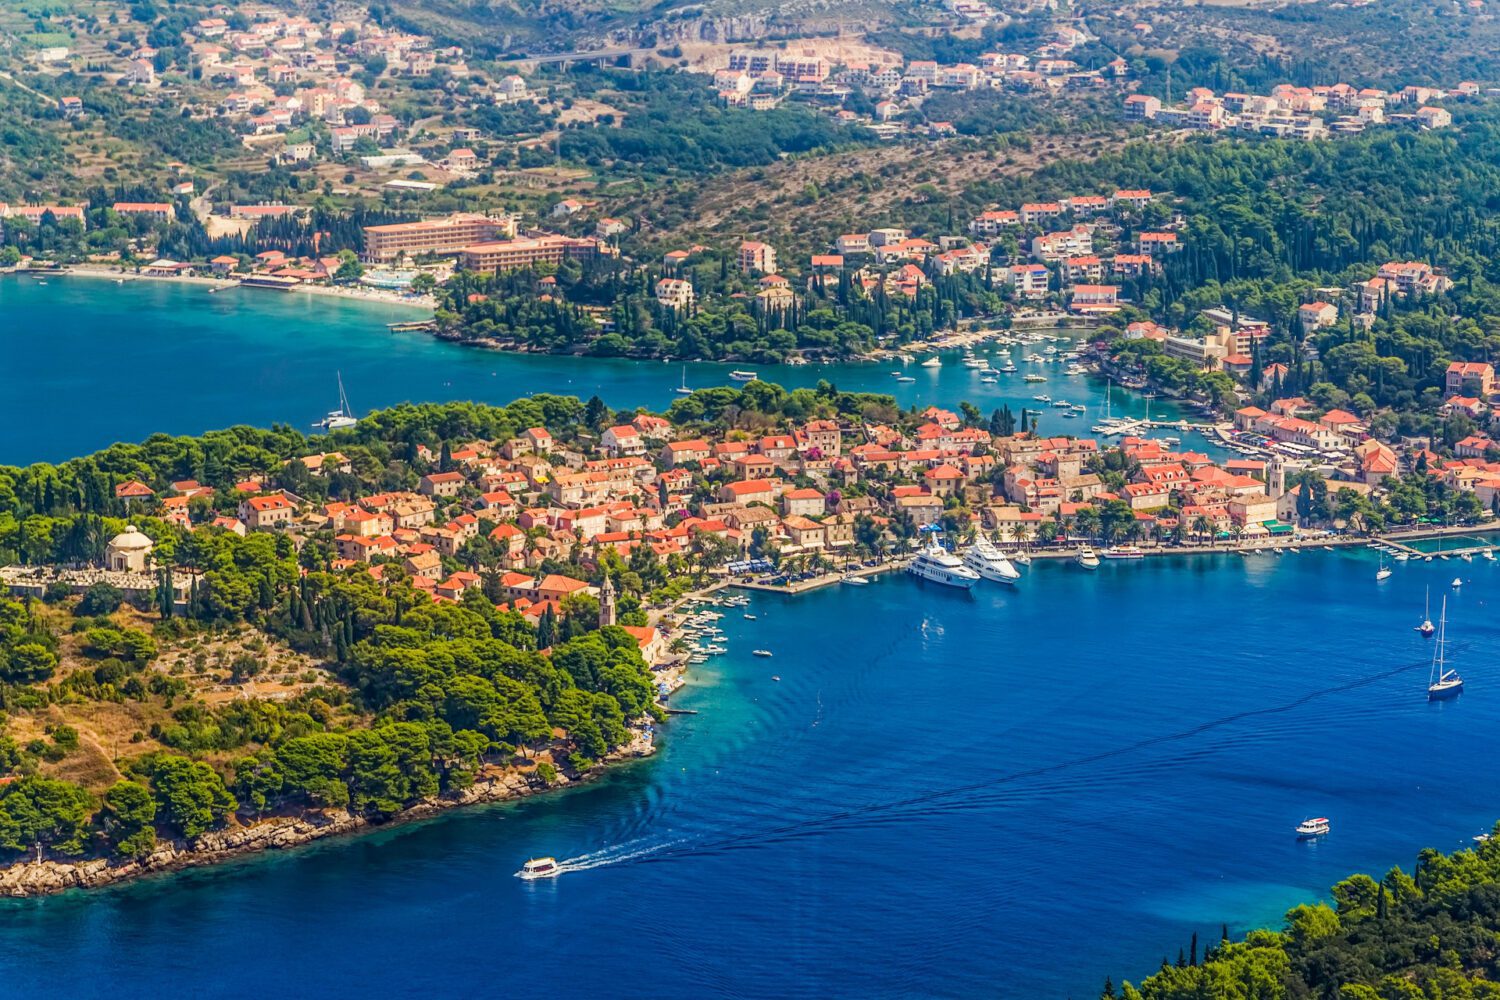 A view of Cavtat near Dubrovnik, Croatia